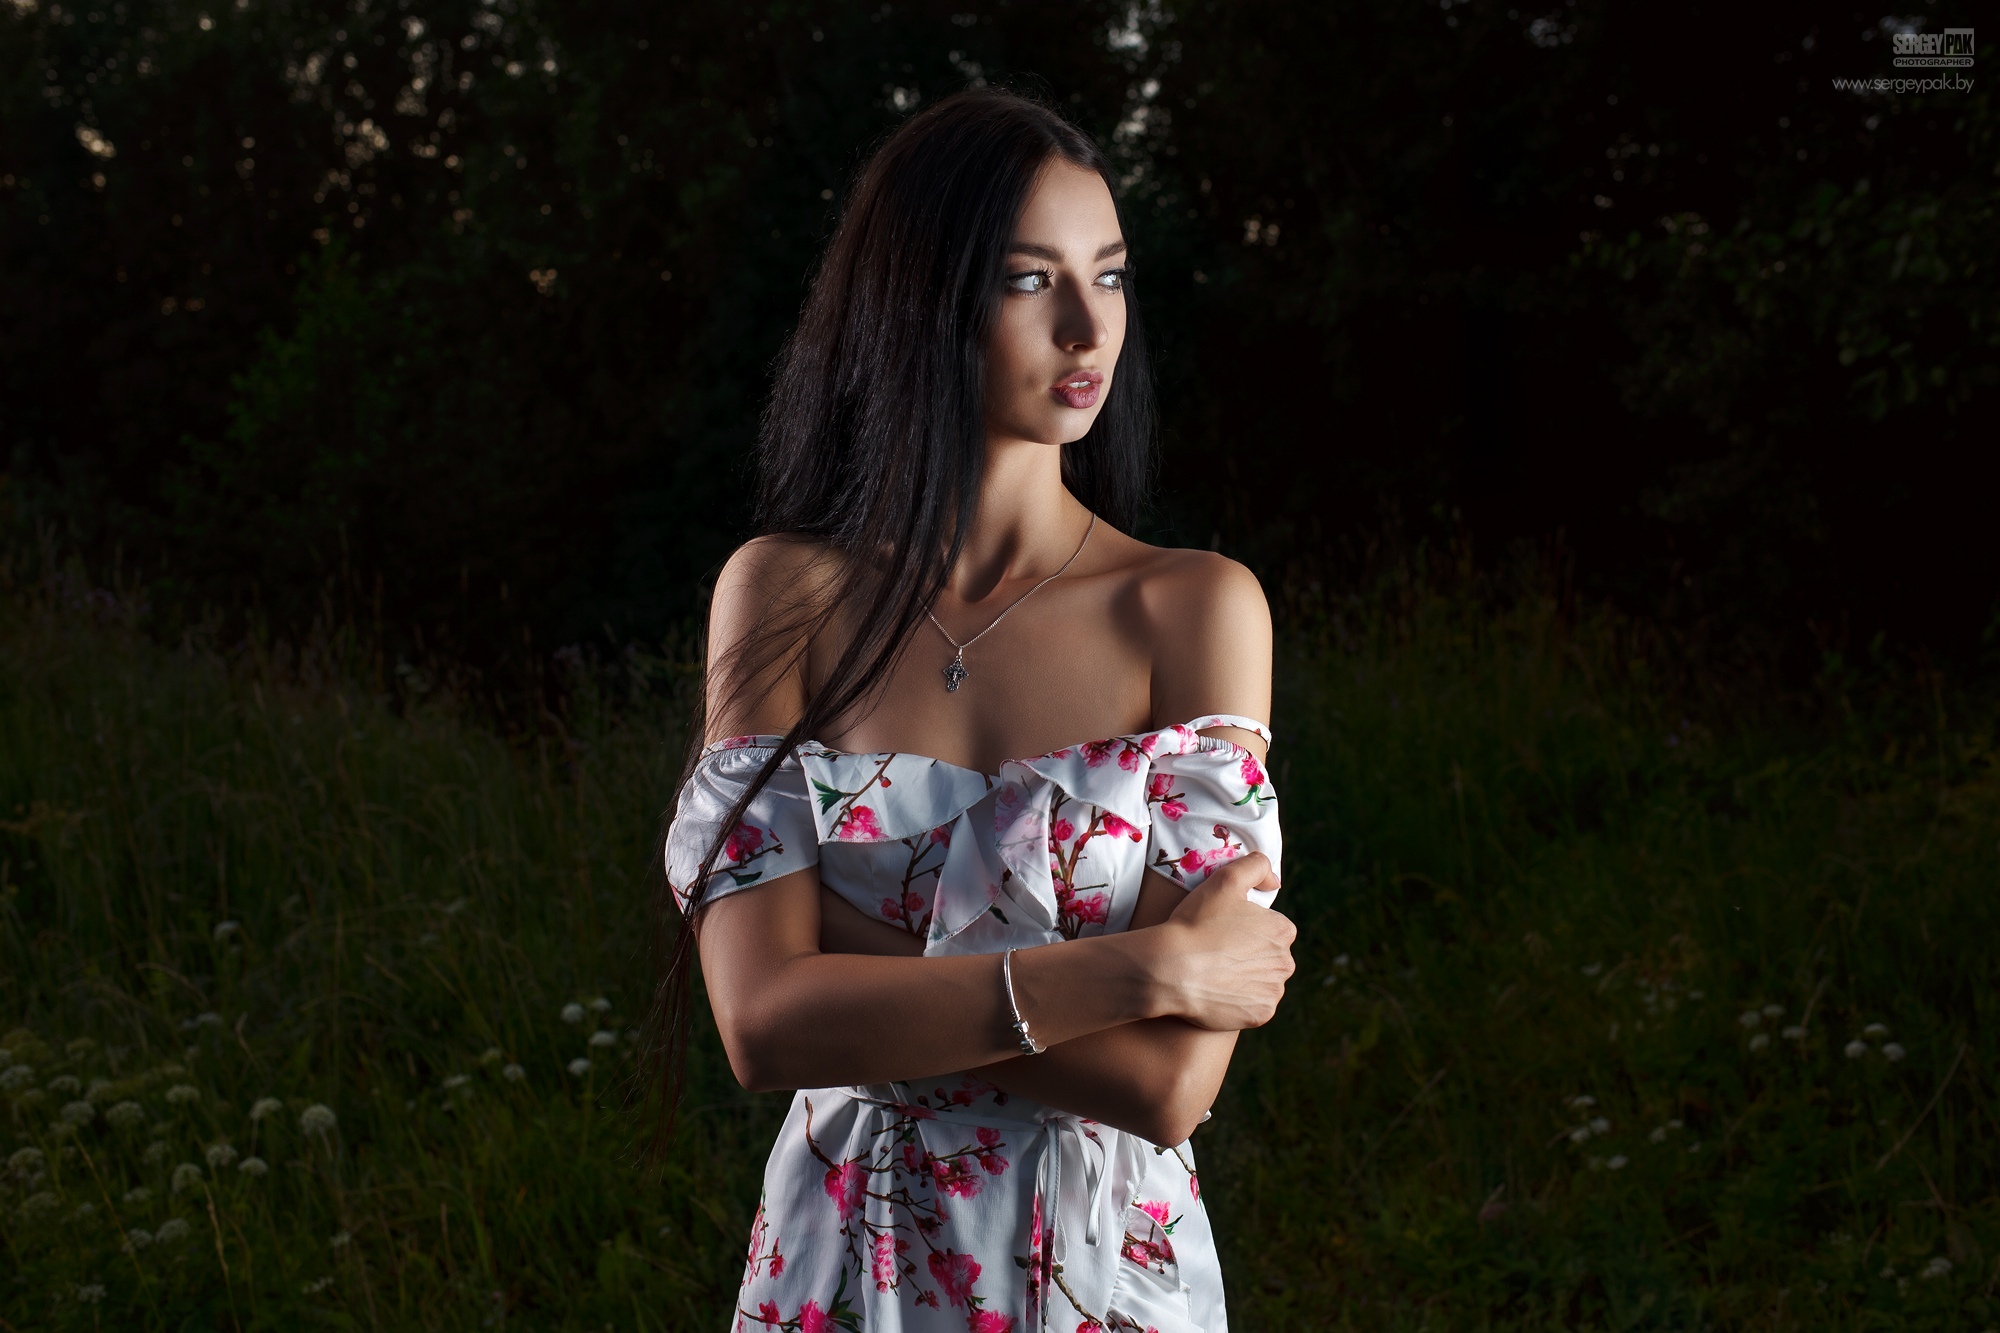 Sergey Pak Women Model Brunette Women Outdoors Dress Trees Grass Looking Away Long Hair Arms Crossed 2000x1333